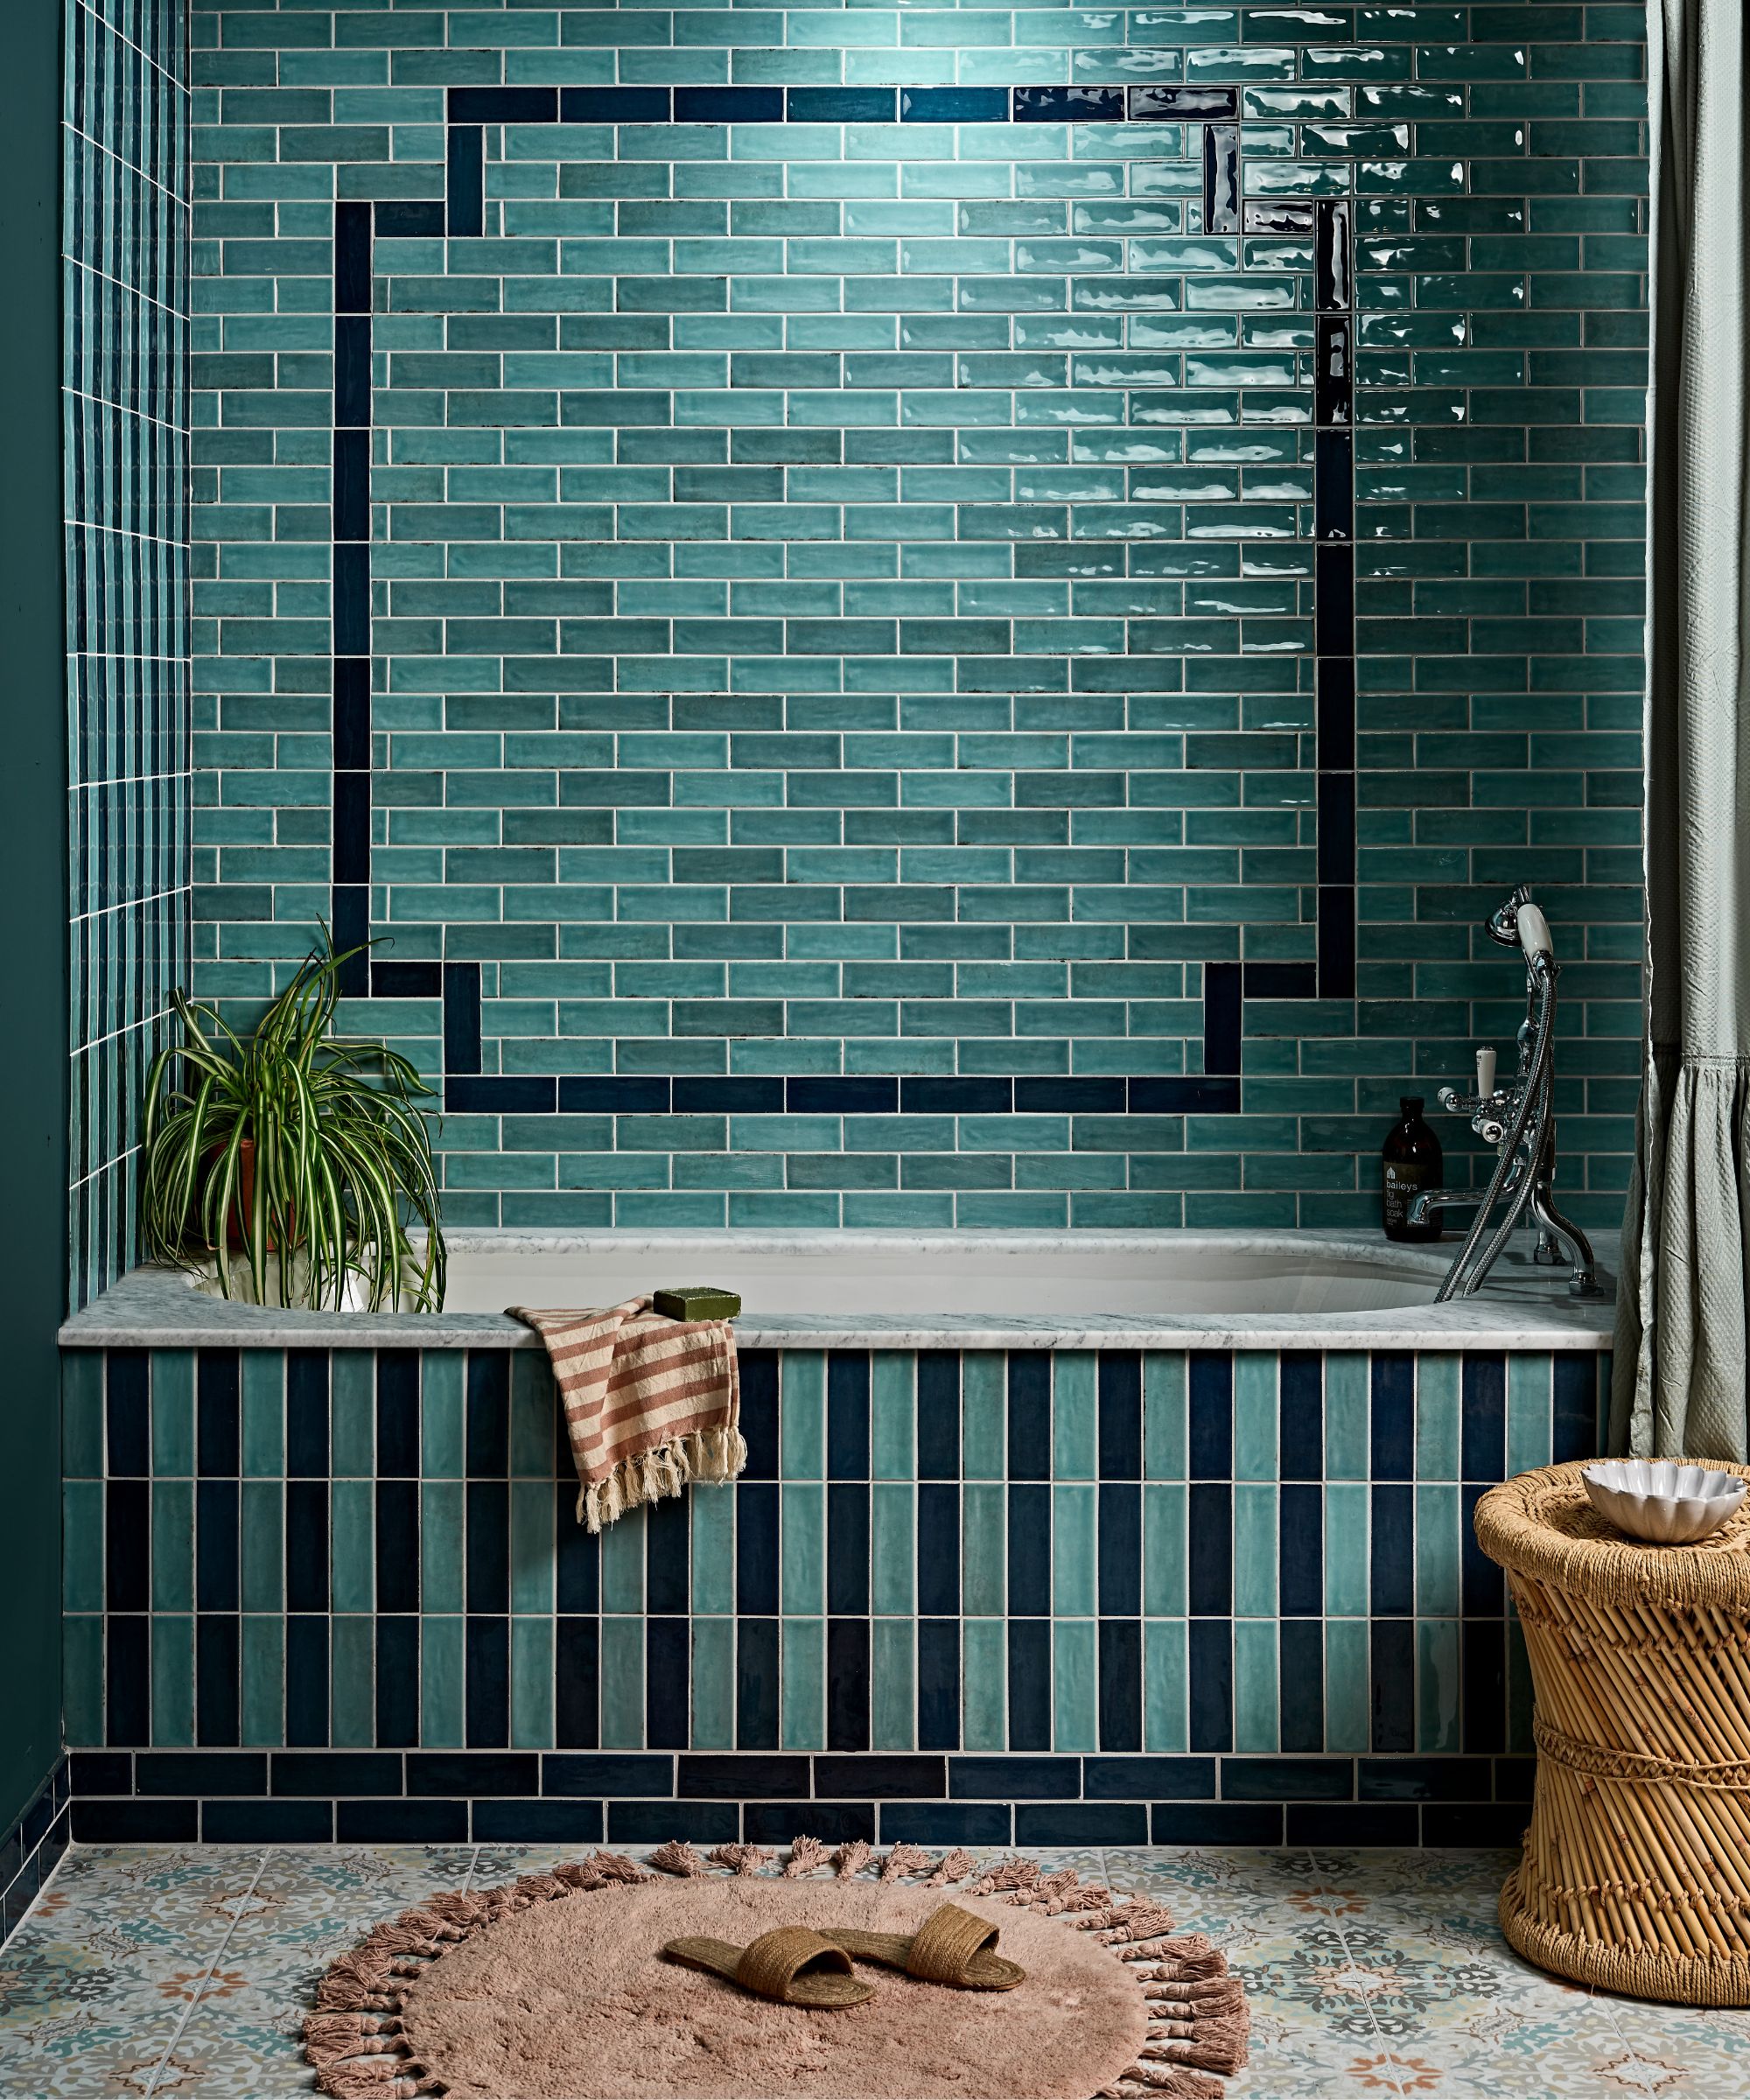 green tiled bath with a striped bath panel